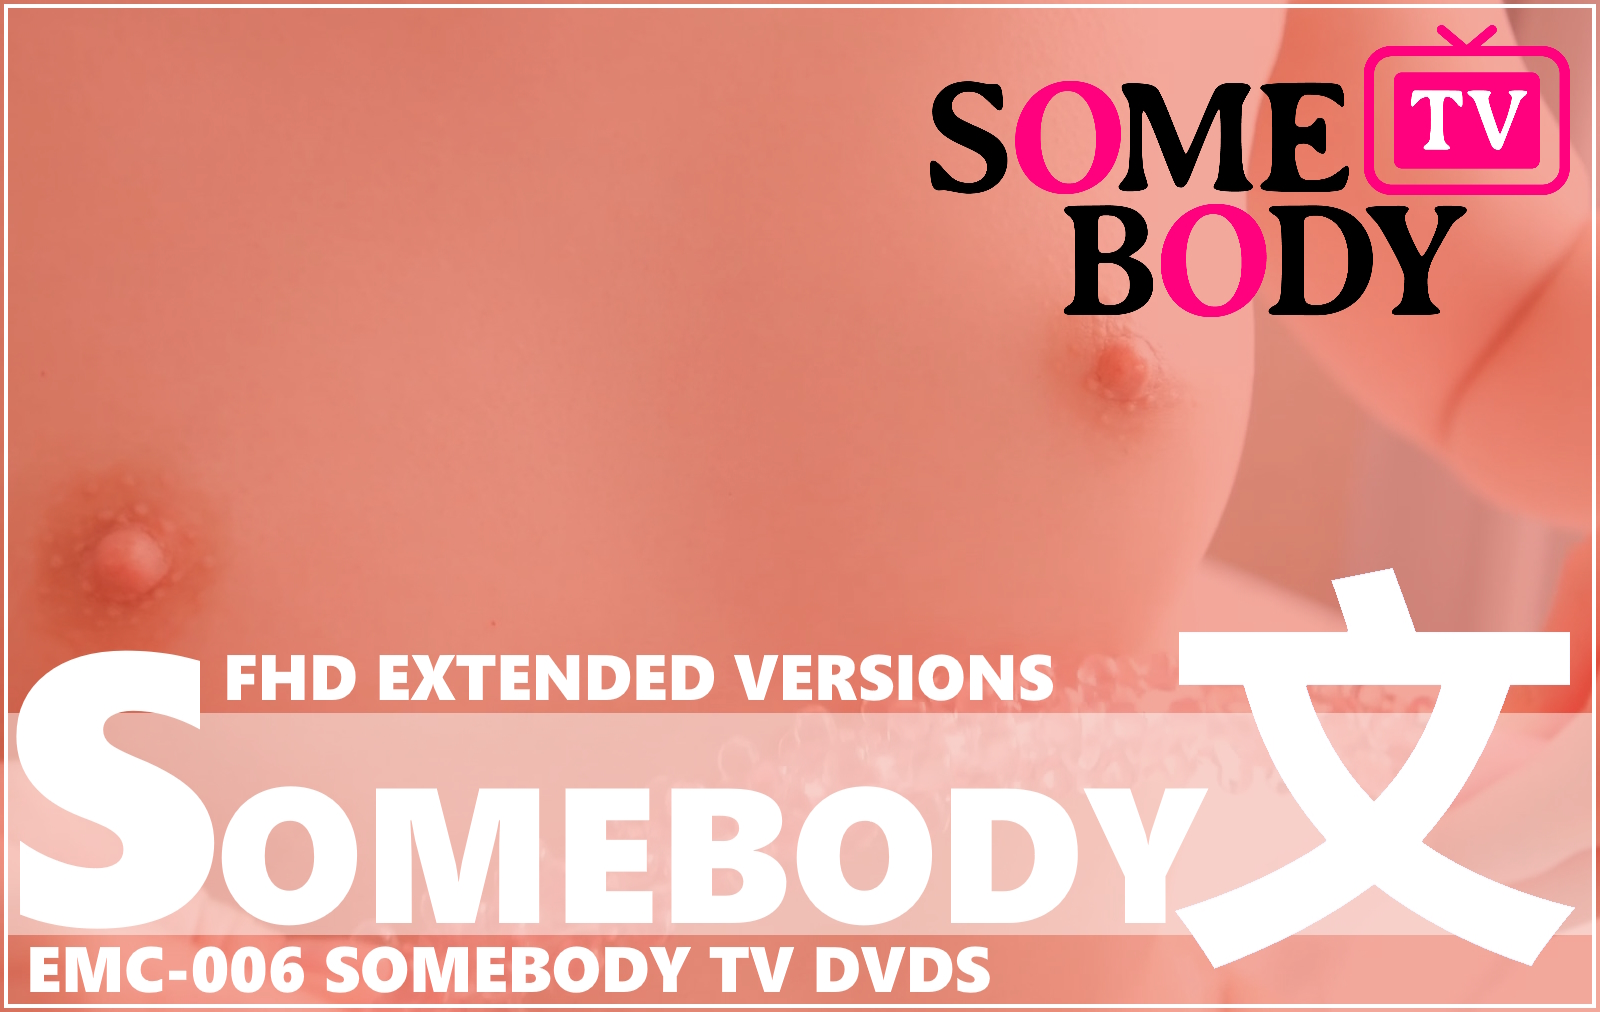 EMC-006 Somebody TV Limited Extended DVDs